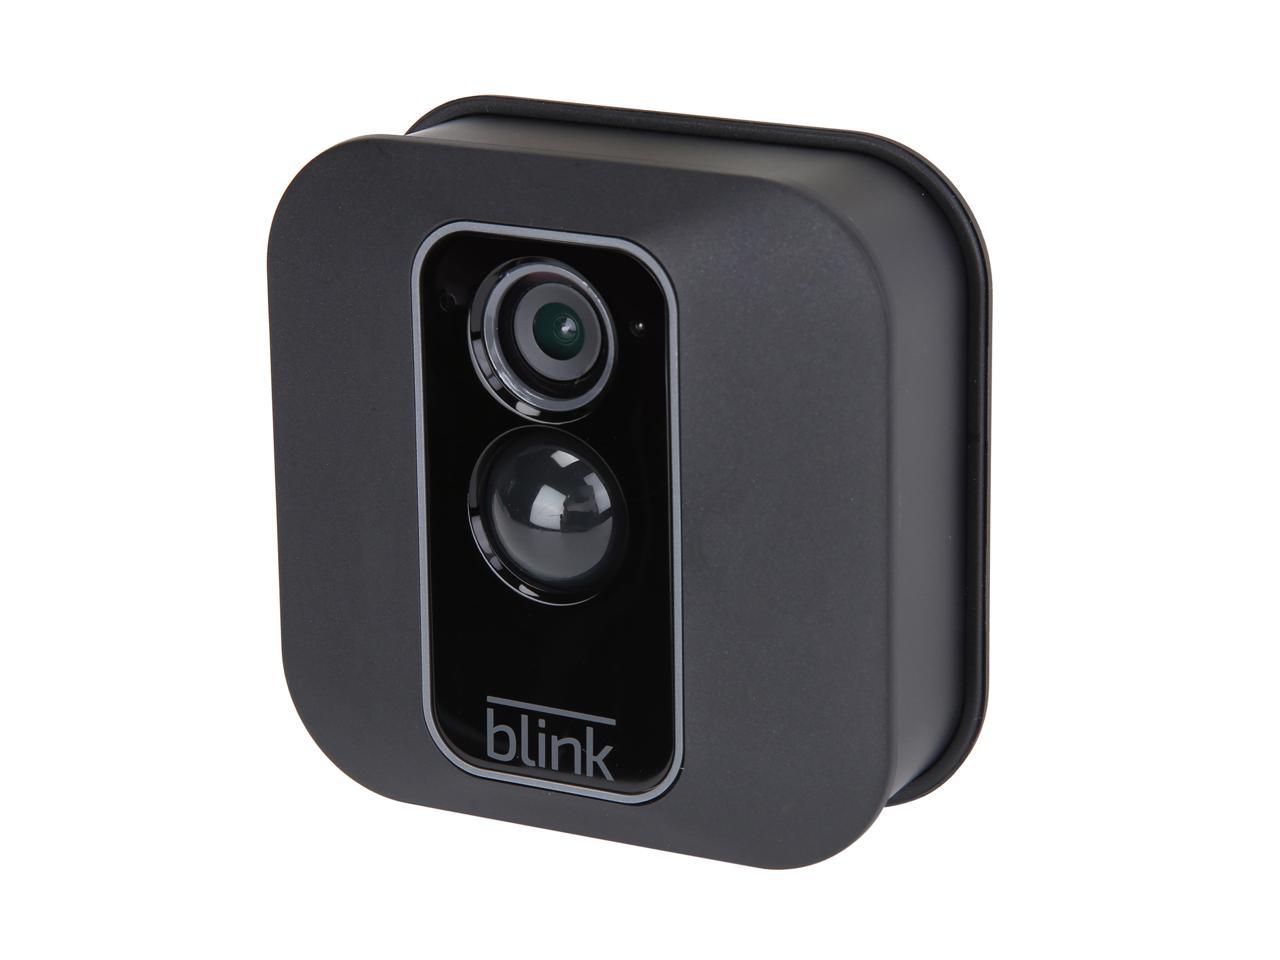 blink camera outdoor security wireless xt2 audio kit way battery indoor smart cloud storage included